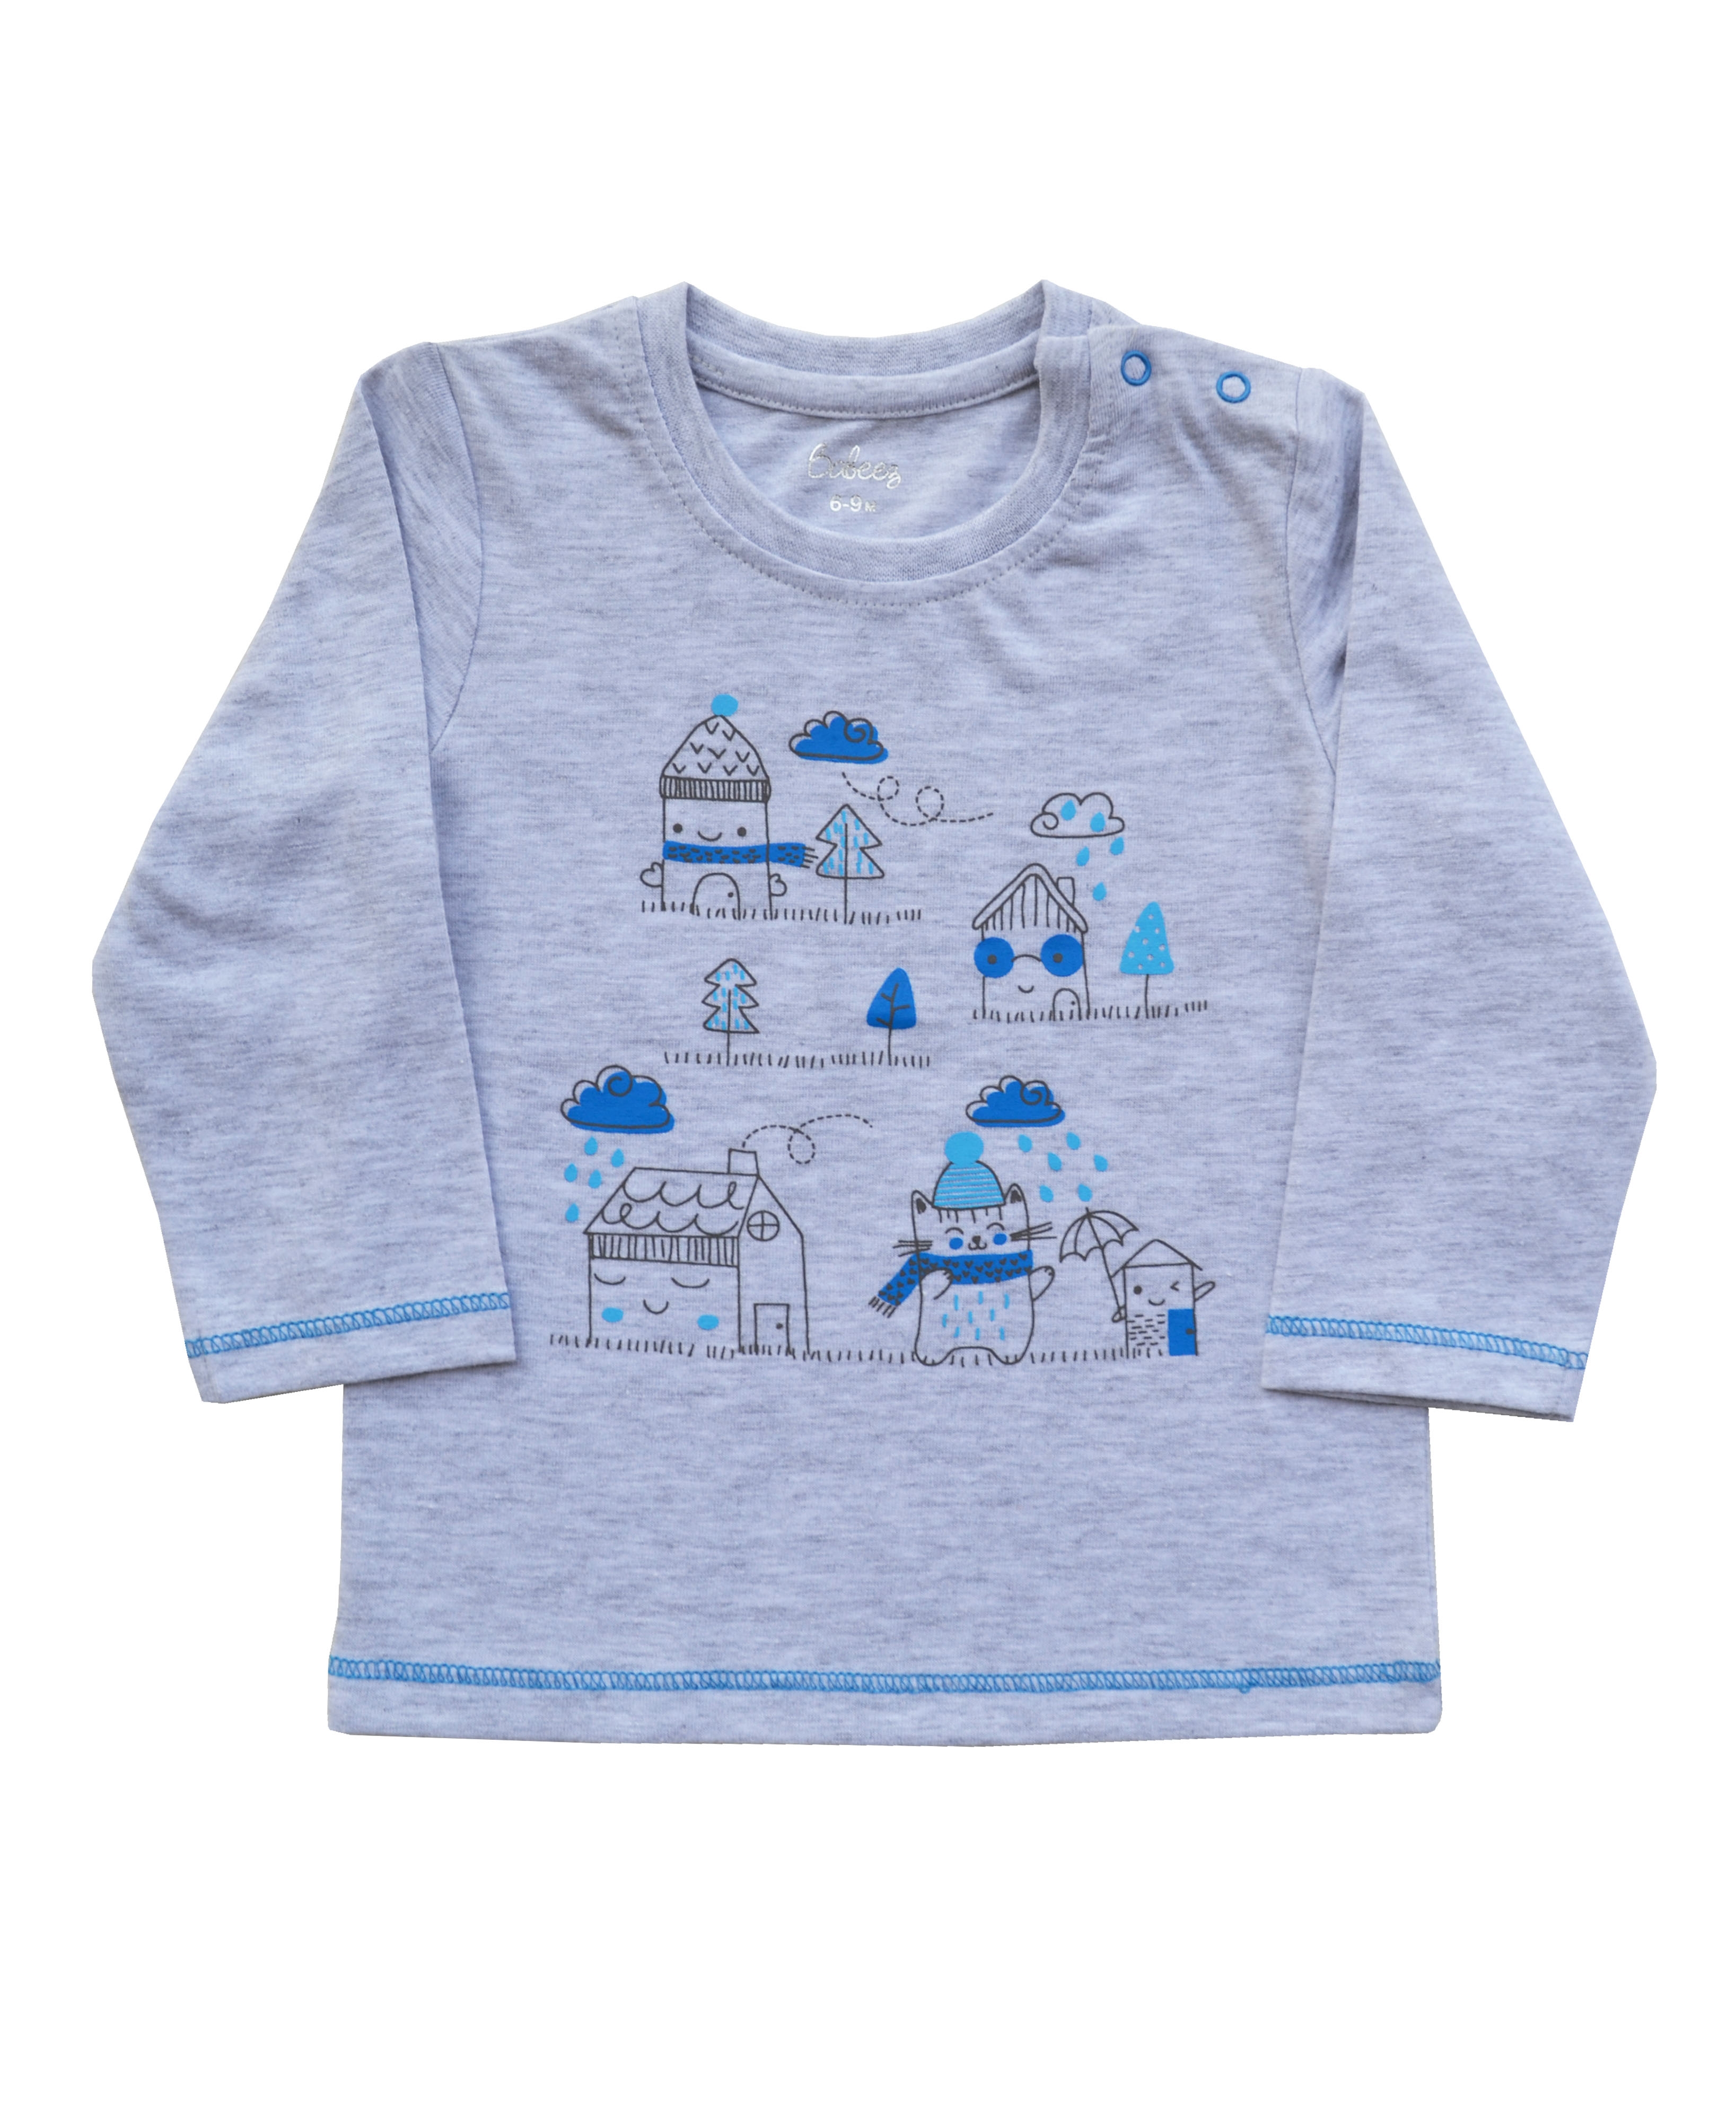 Blue House Print on Grey melange Long Sleeve T-Shirt (100% Cotton Single Jersey)